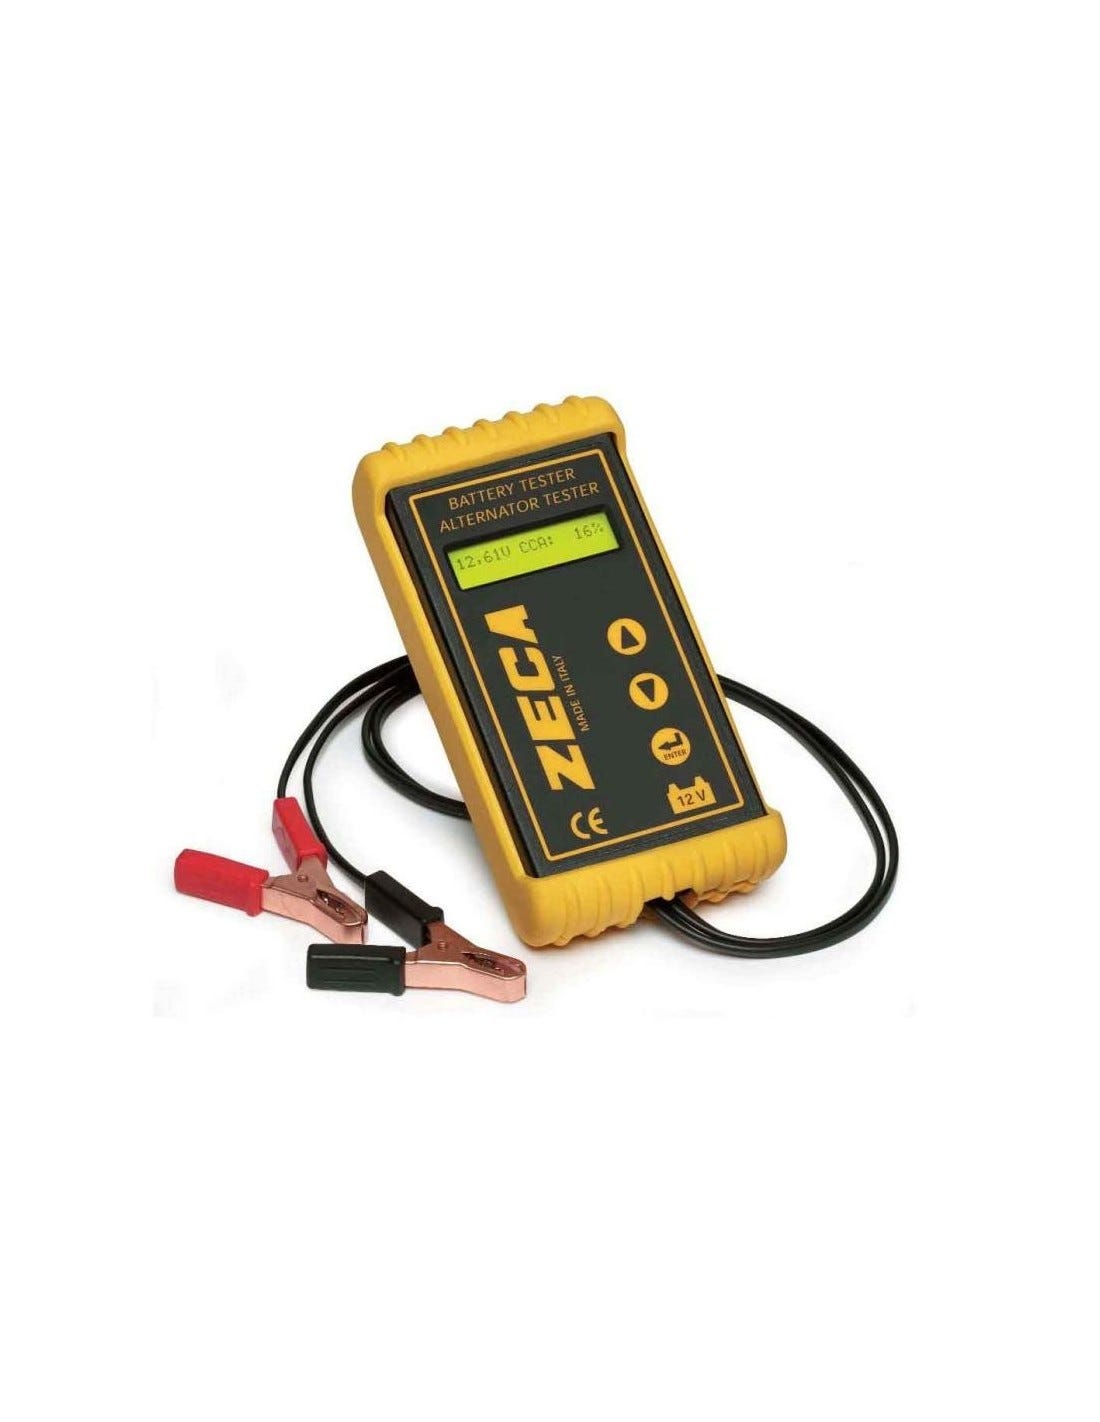 ZECA 210 - Tester per Batterie Avviamento e Alternatori (2 in 1)